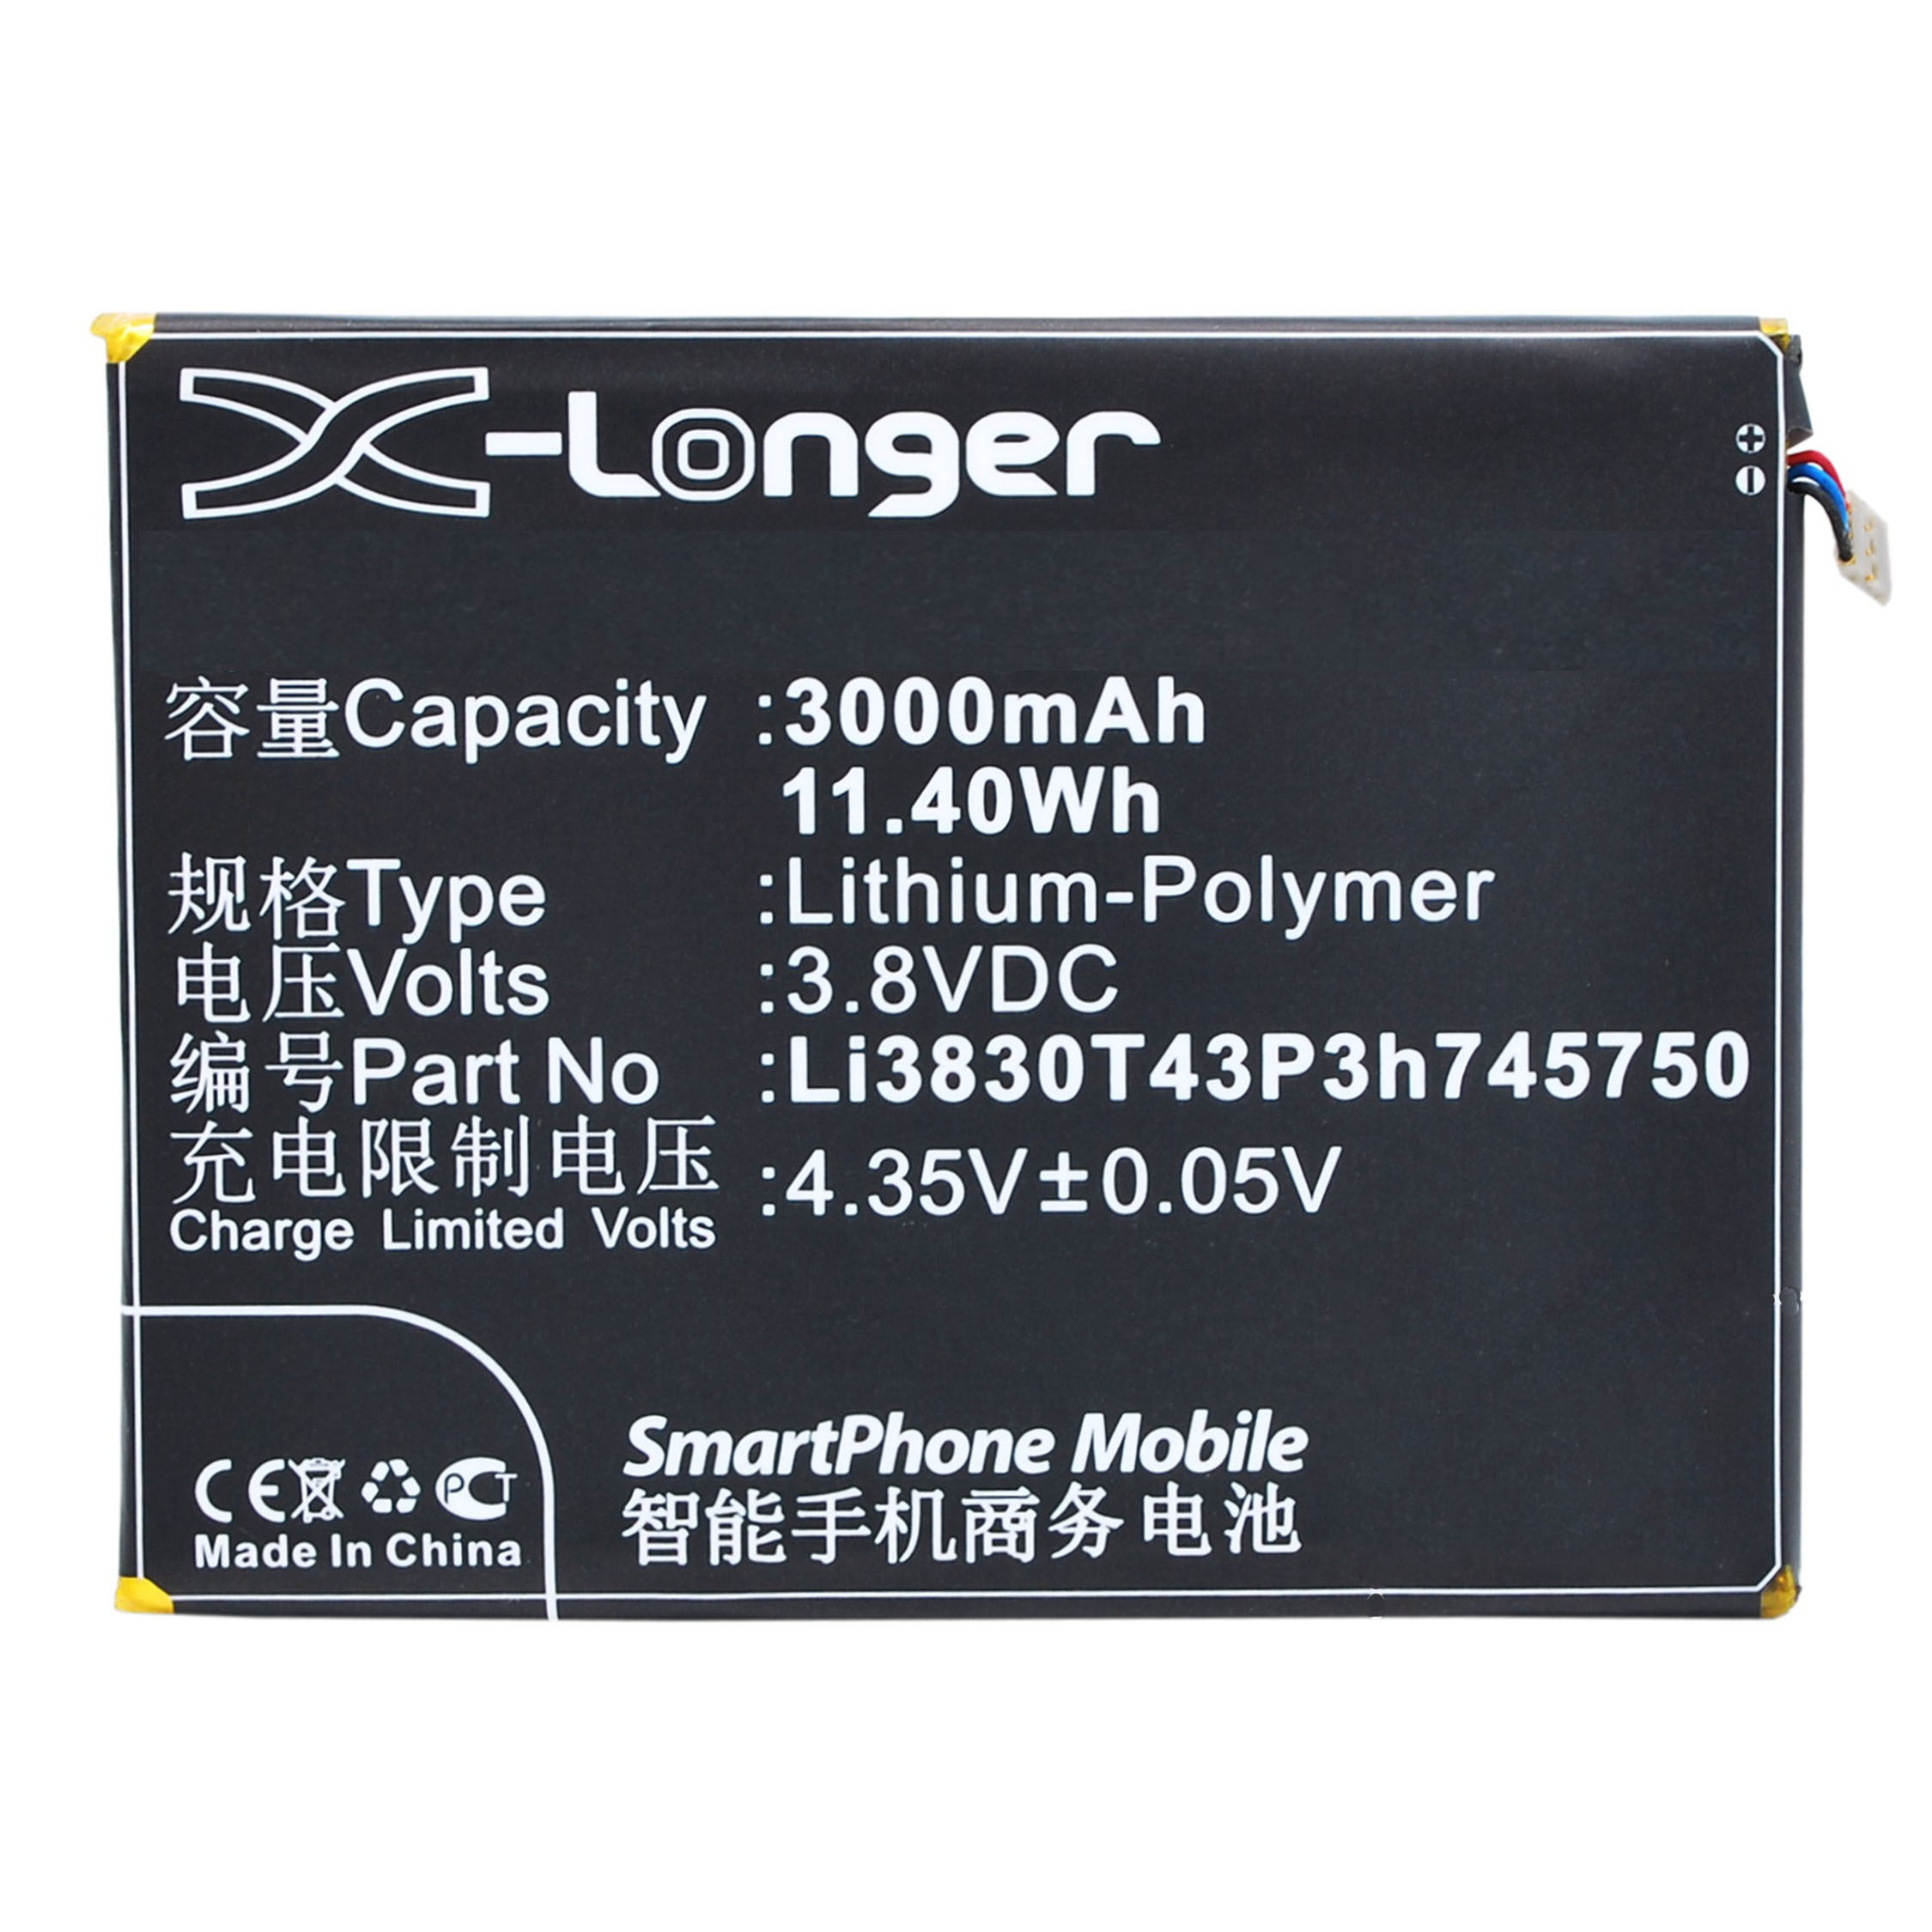 Synergy Digital Battery Compatible With ZTE Li3830T43P3h745750 Cellphone Battery - (Li-Pol, 3.8V, 3000 mAh / 11.40Wh)